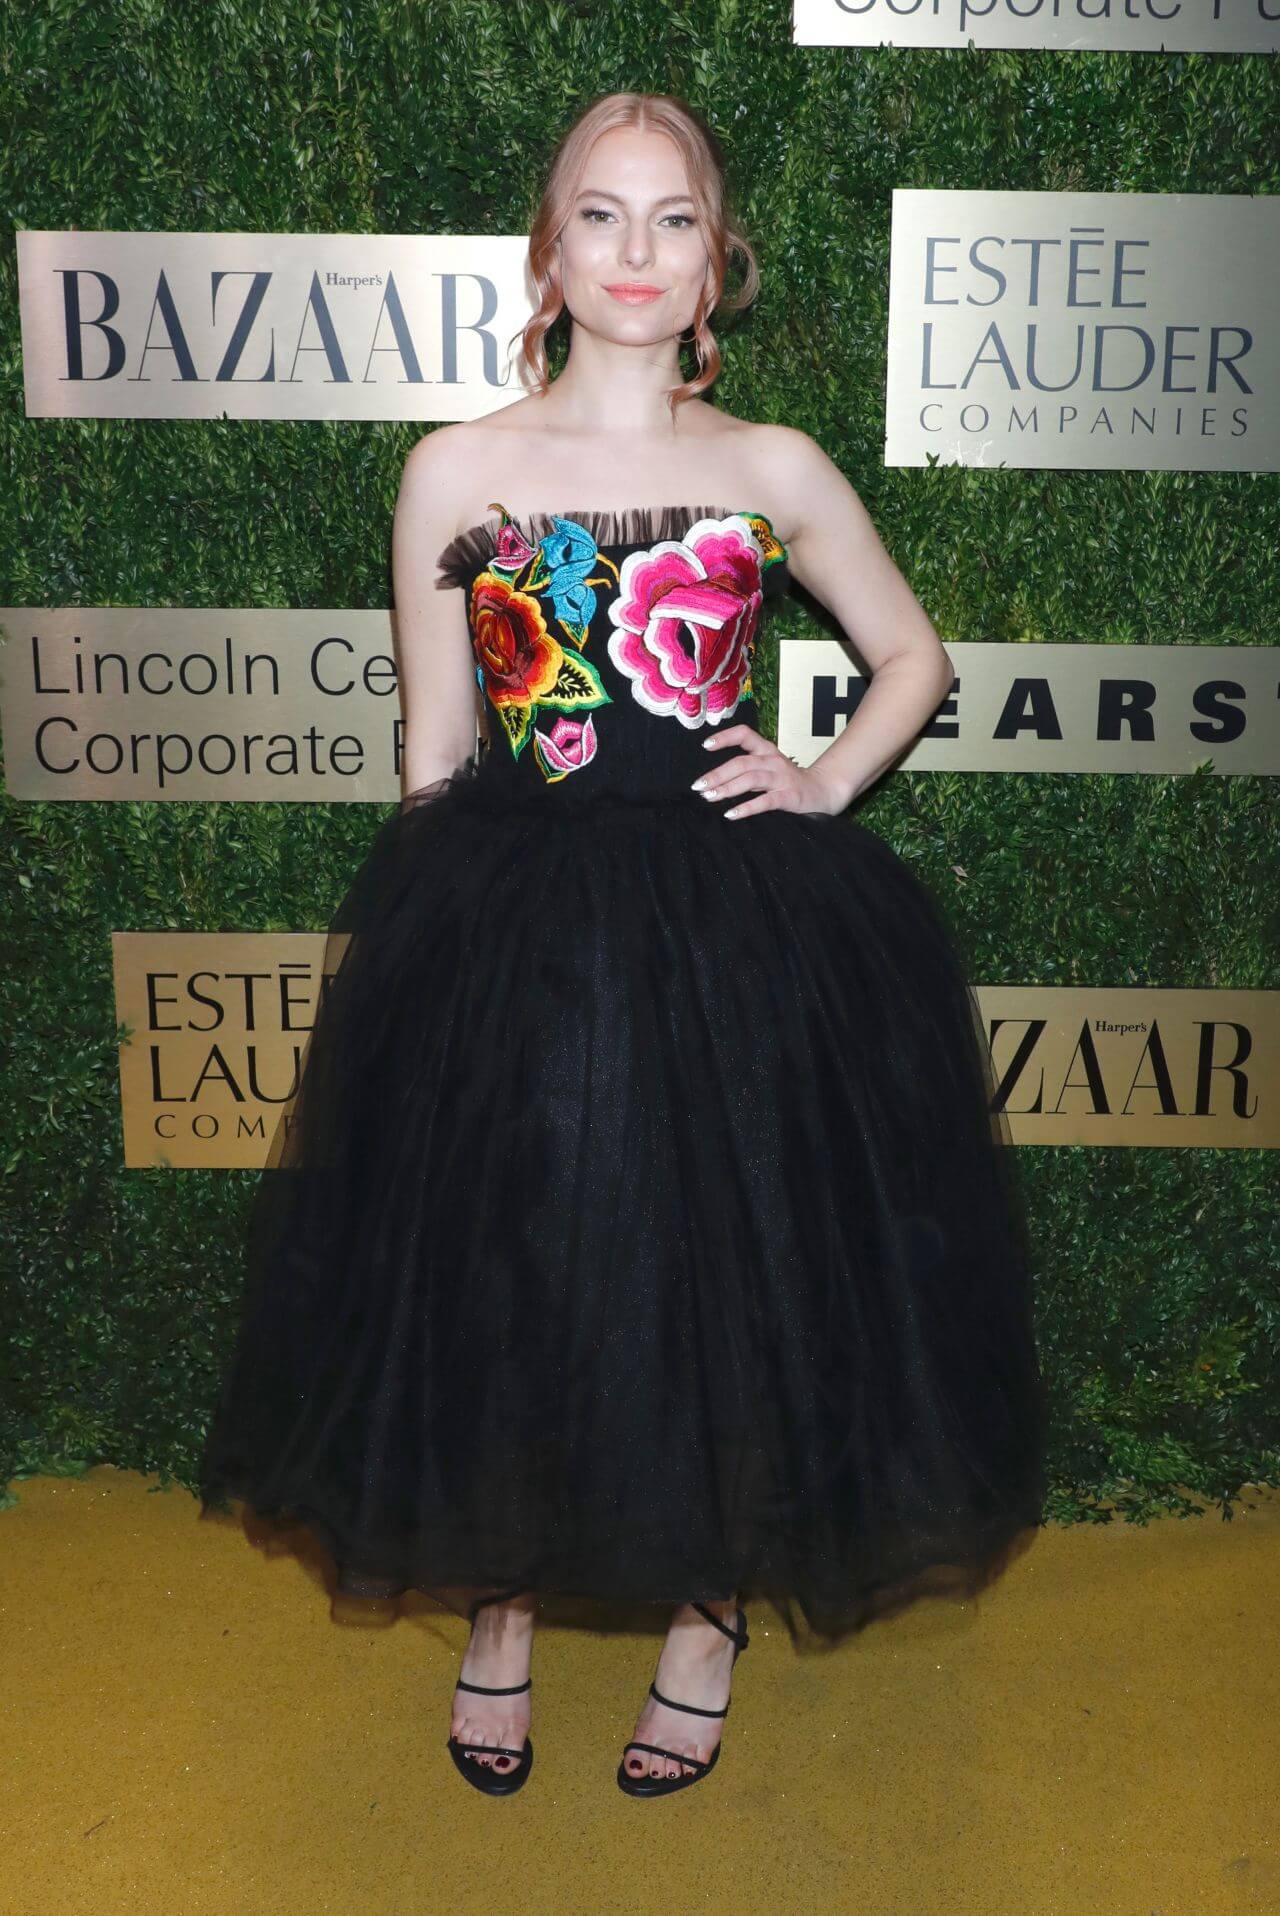 Danielle Lauder In Black Strapless Ball Gown